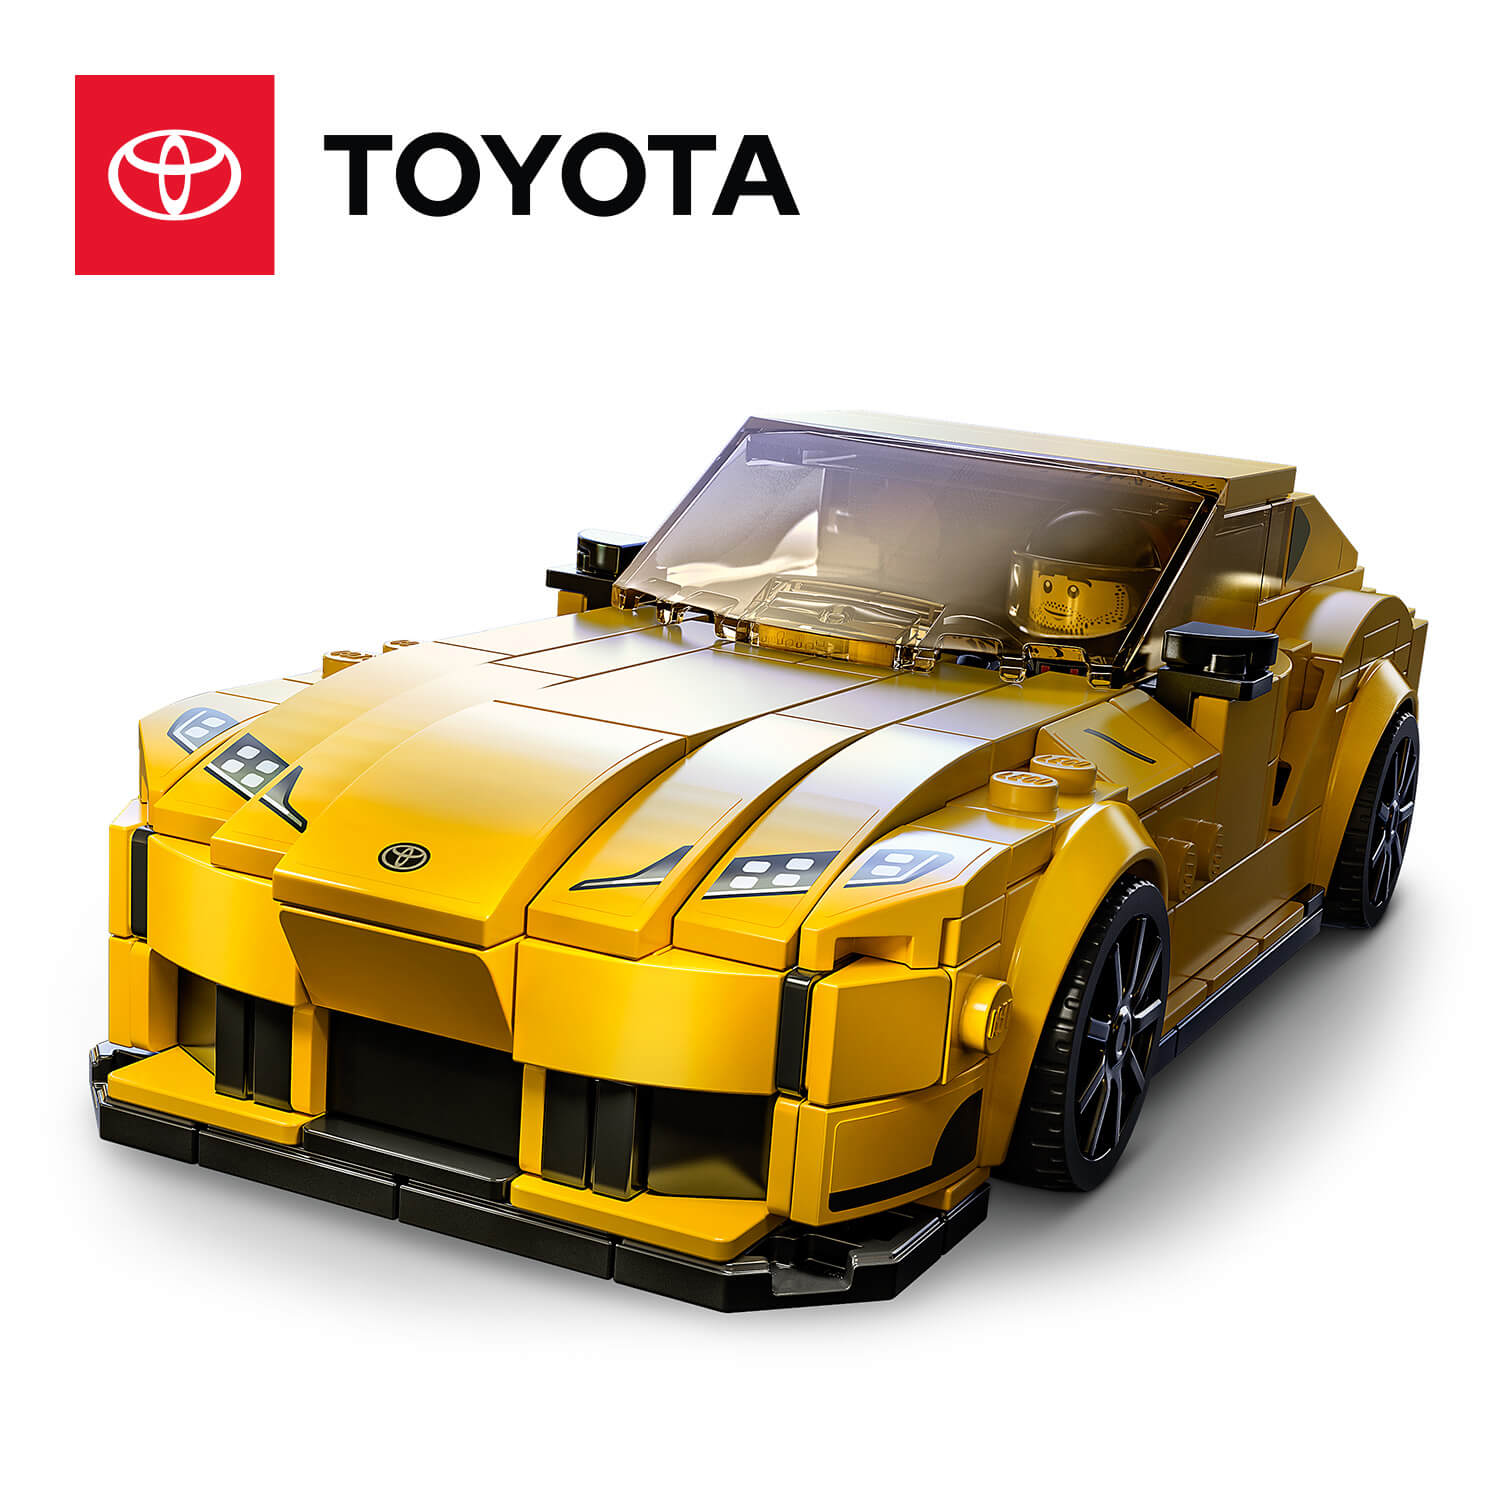 LEGO® Speed Champions 76901 Toyota GR Supra od 403 Kč - Heureka.cz